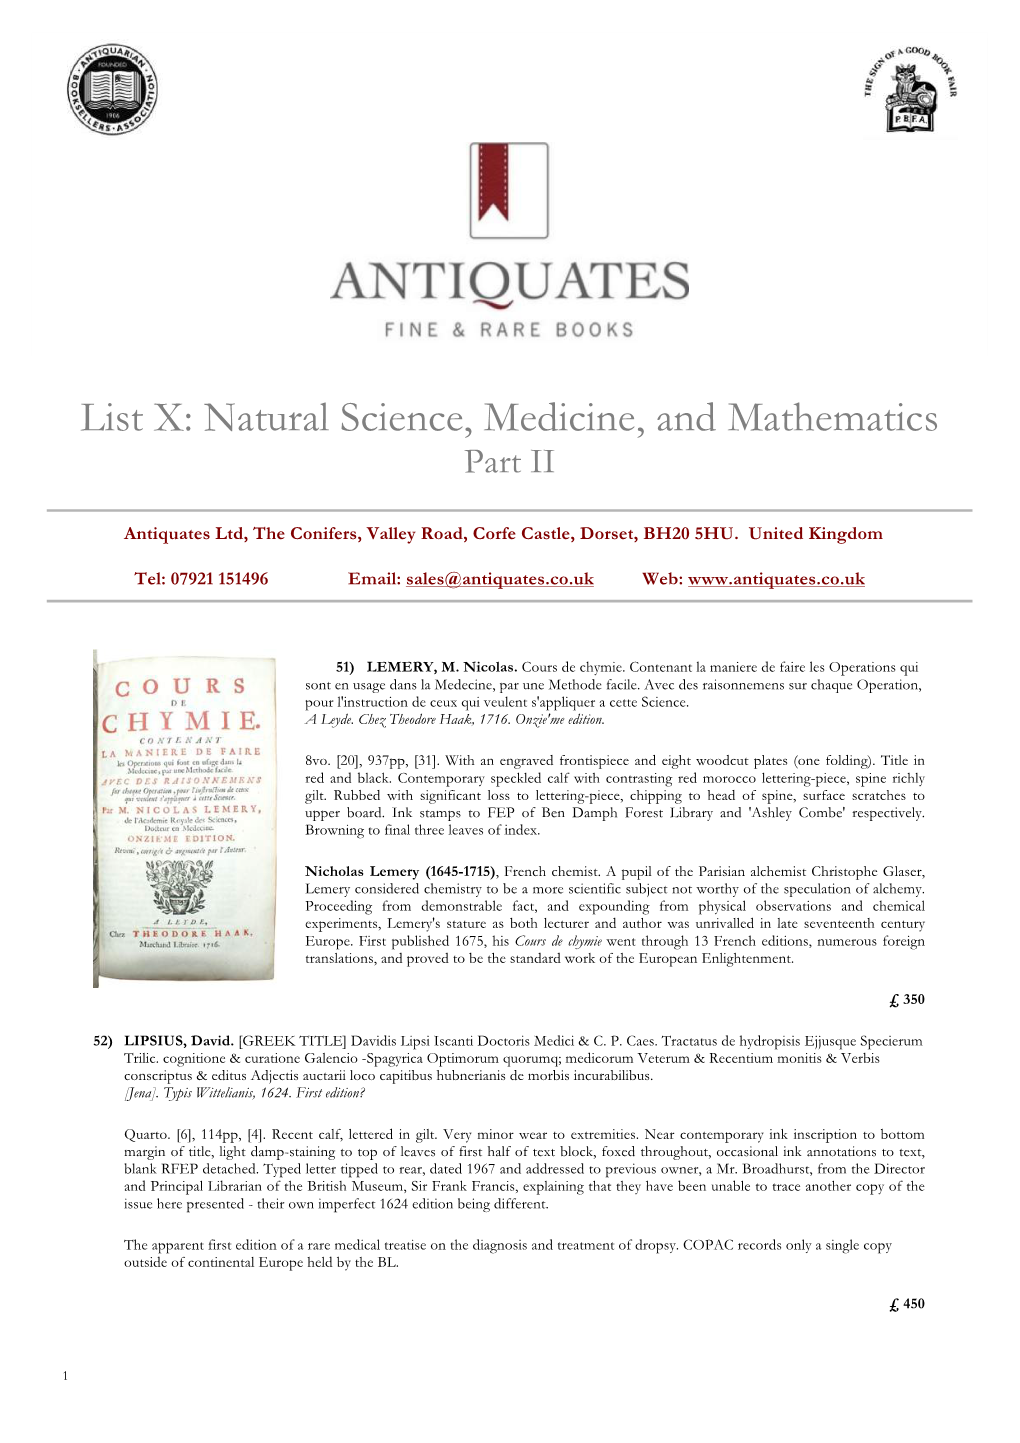 List X: Natural Science, Medicine, and Mathematics Part II